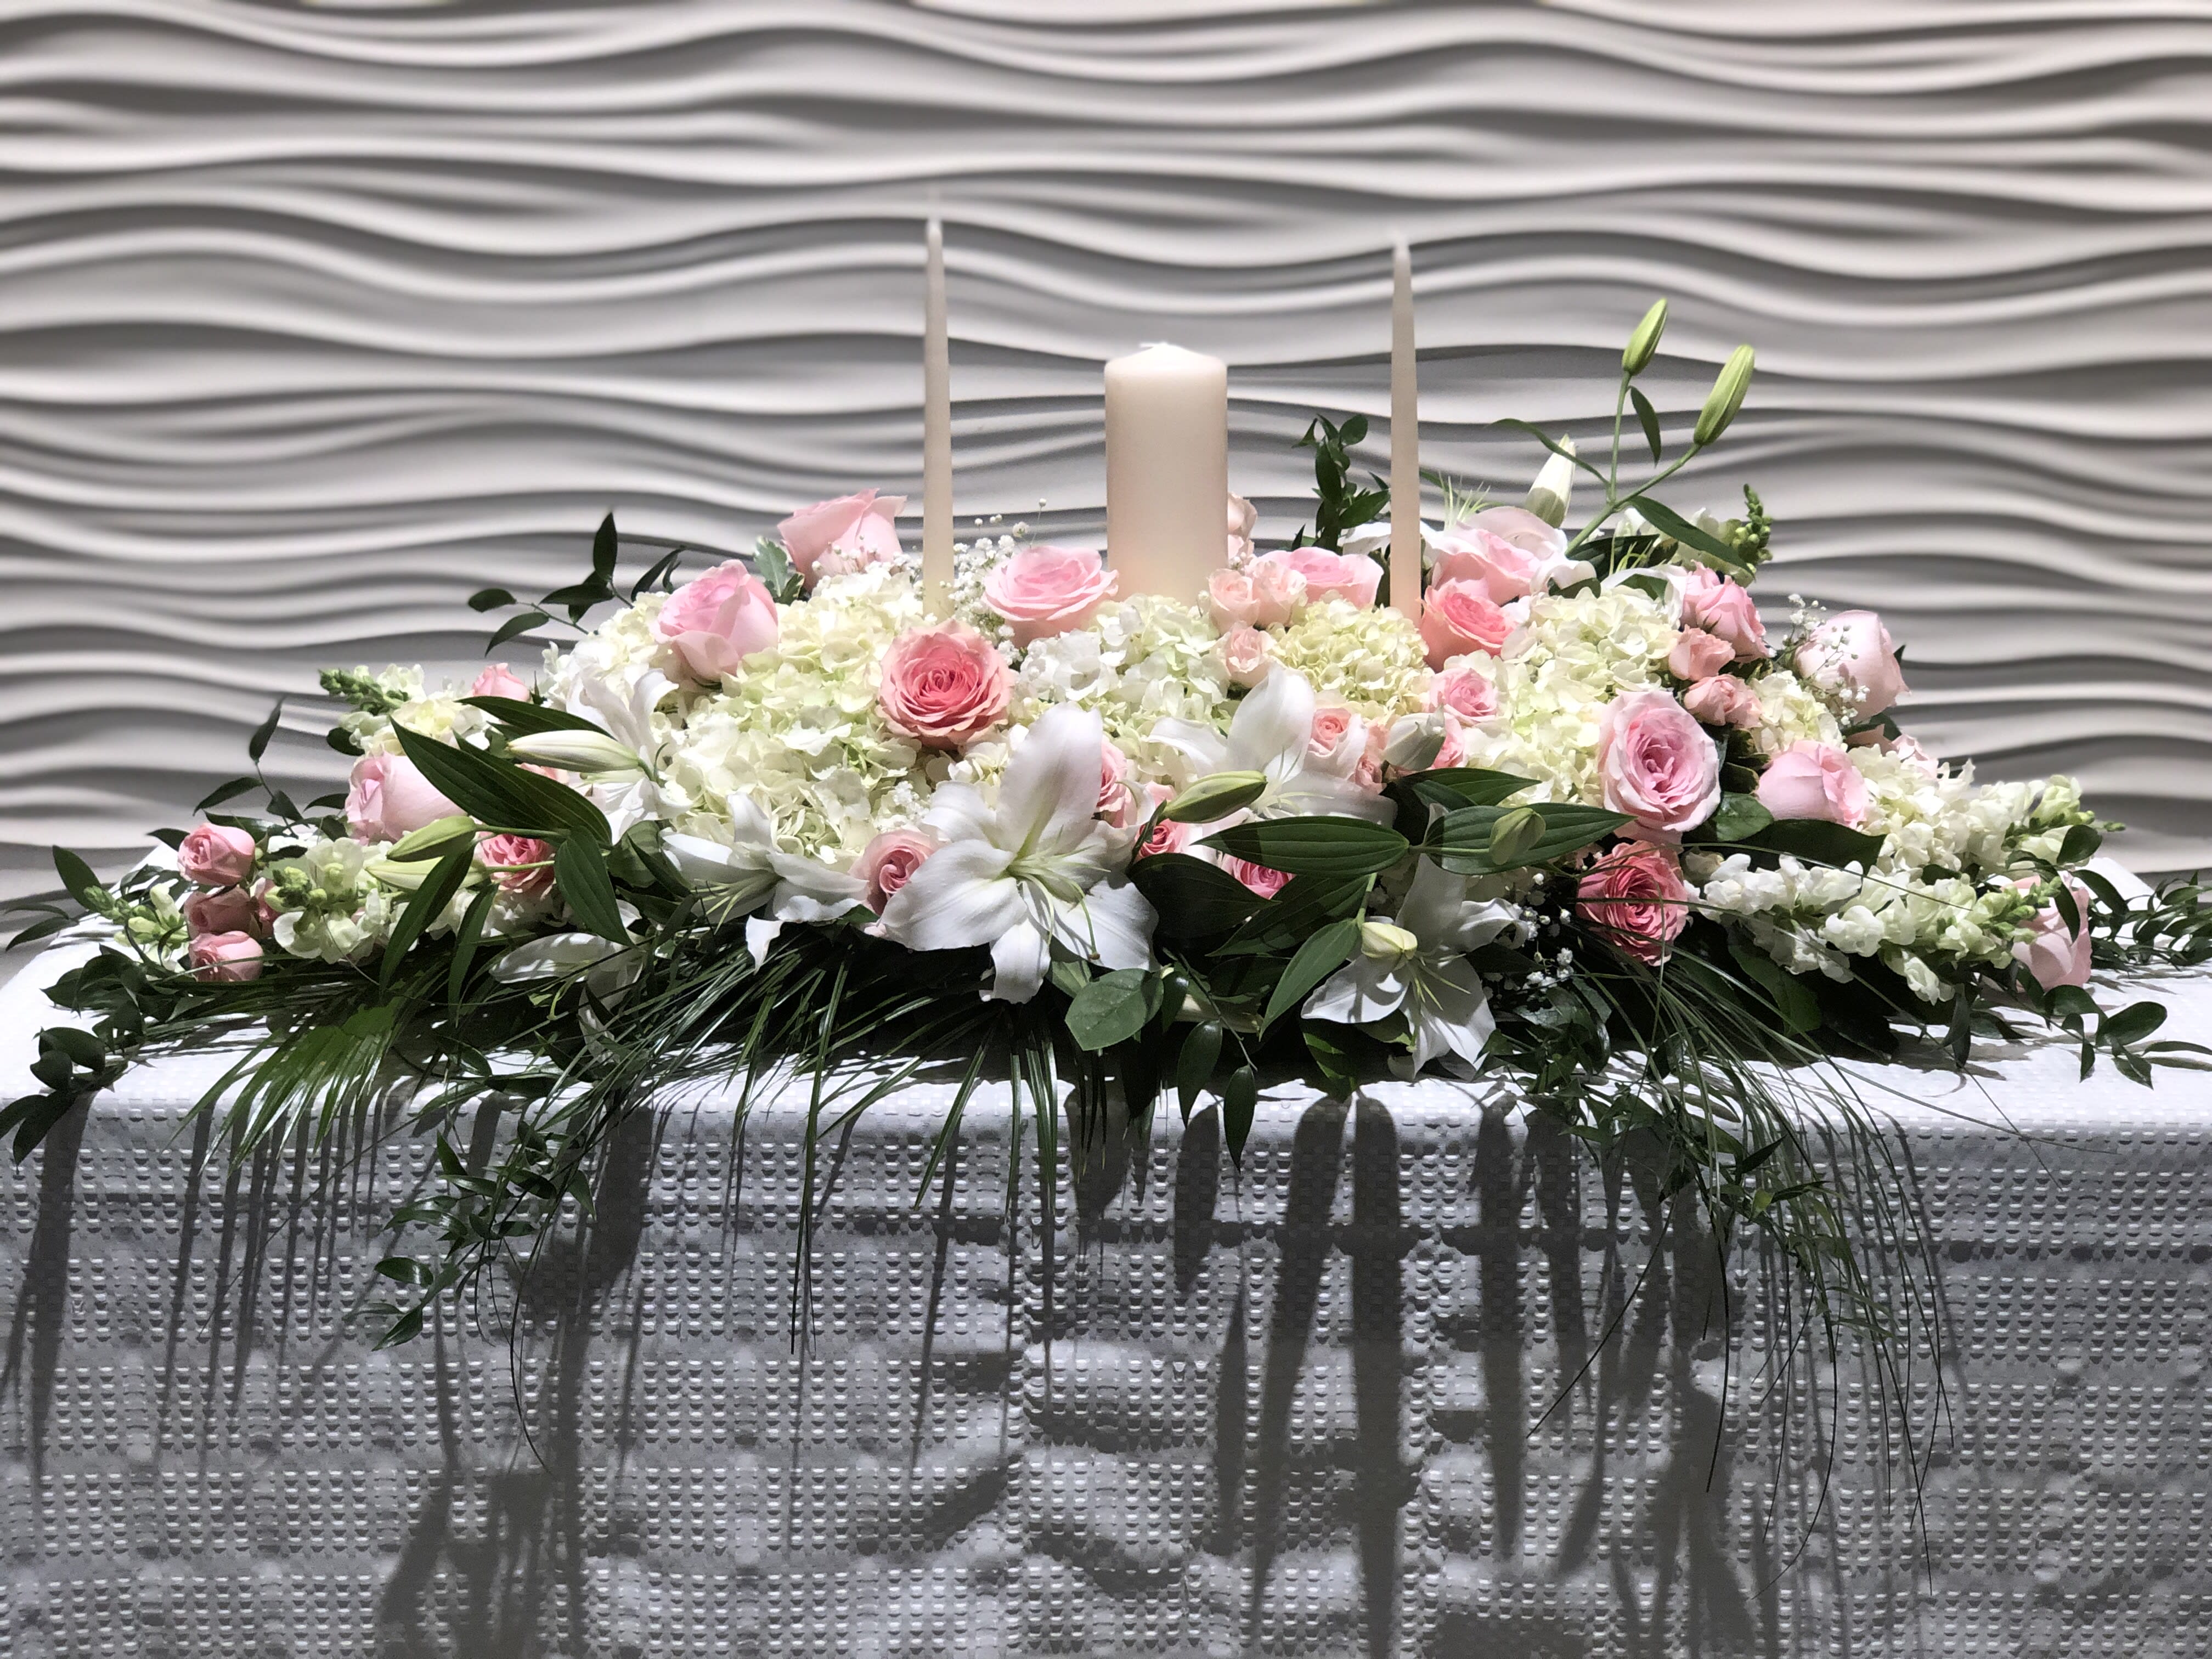 Unity Candle Altar Arrangement Weddings By Twin Towers Florist Arlington Va In Arlington Va Twin Towers Florist